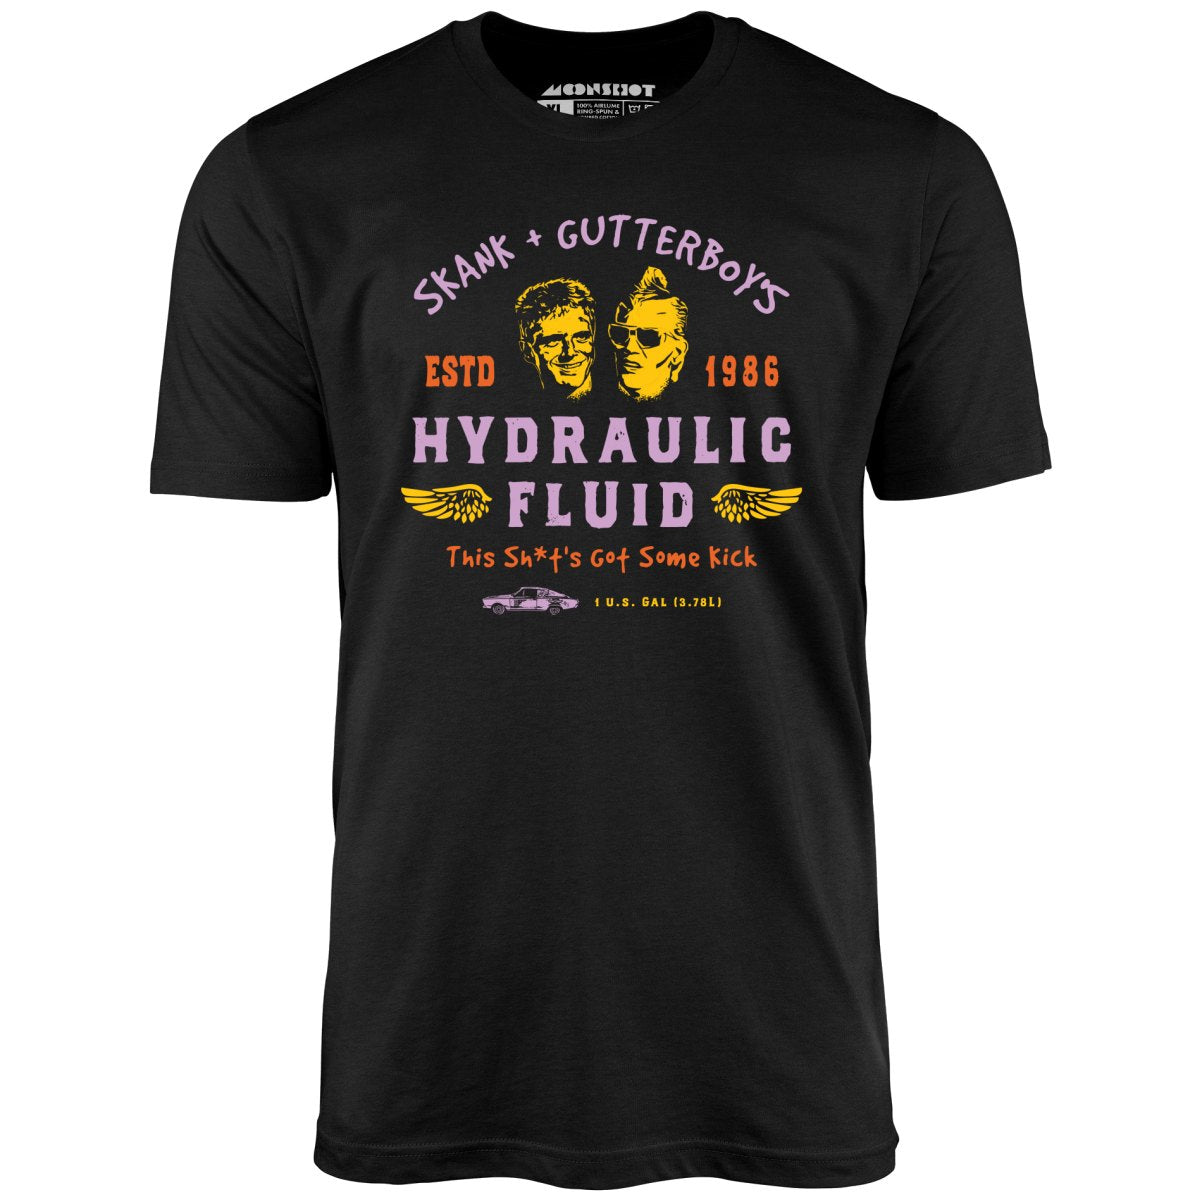 The Wraith - Skank & Gutterboy's Hydraulic Fluid - Unisex T-Shirt